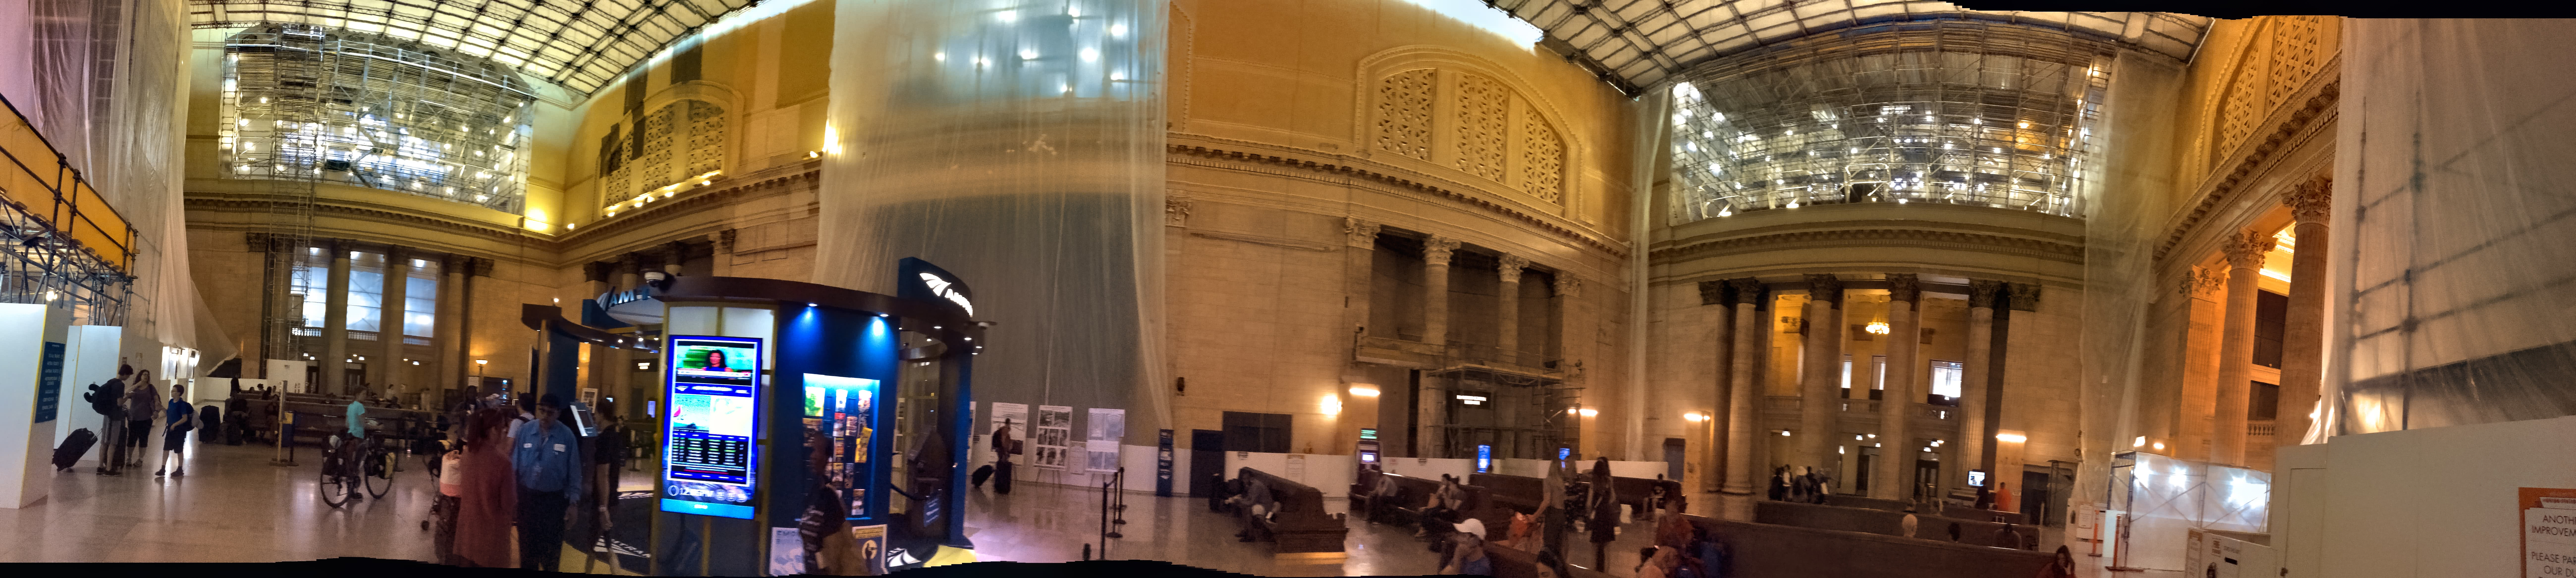 Chicago Union Station 1.jpg